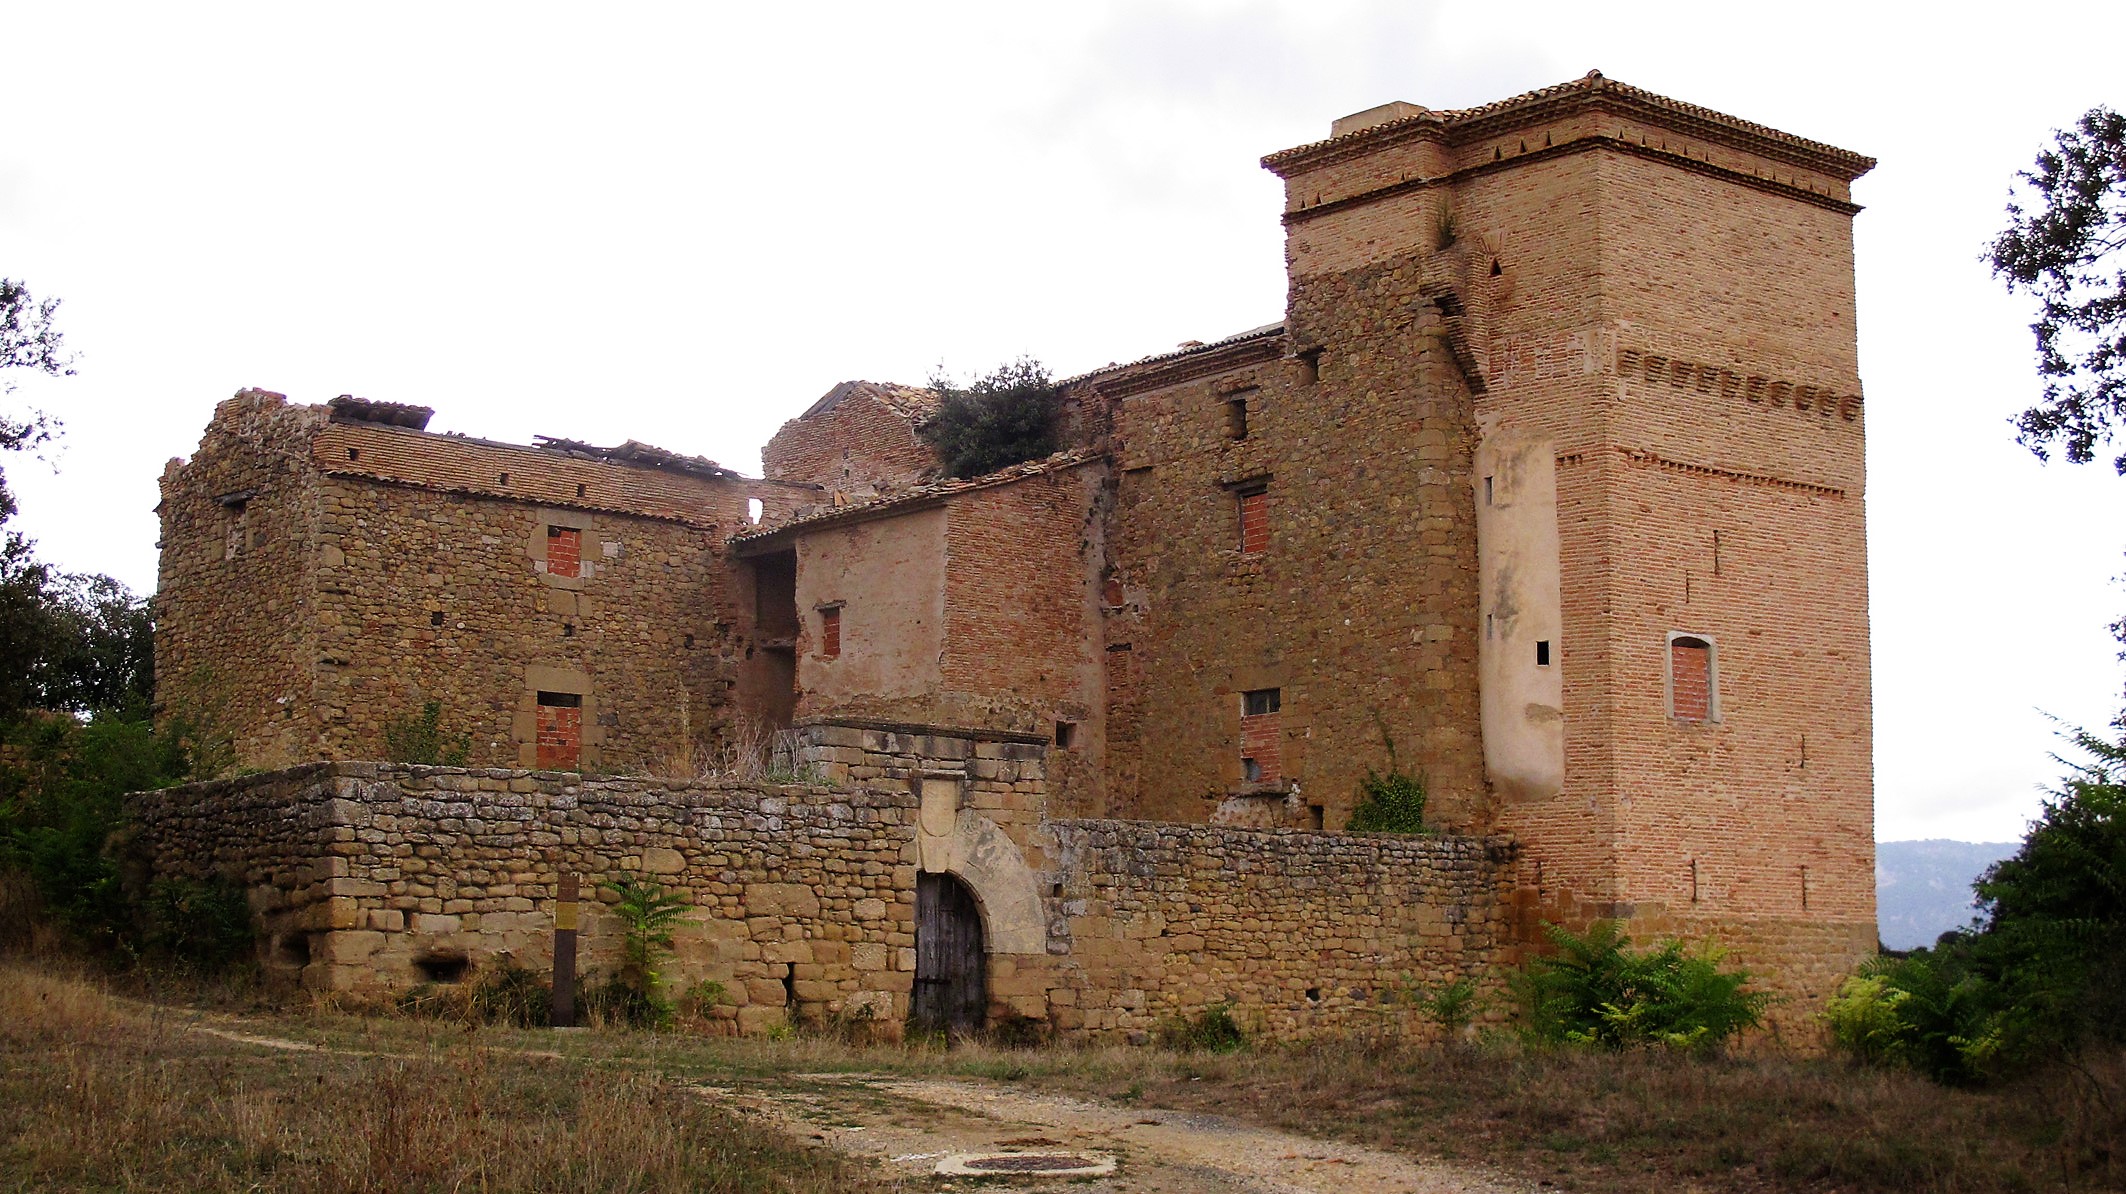 El Palacio jauregia, Iguzkitza